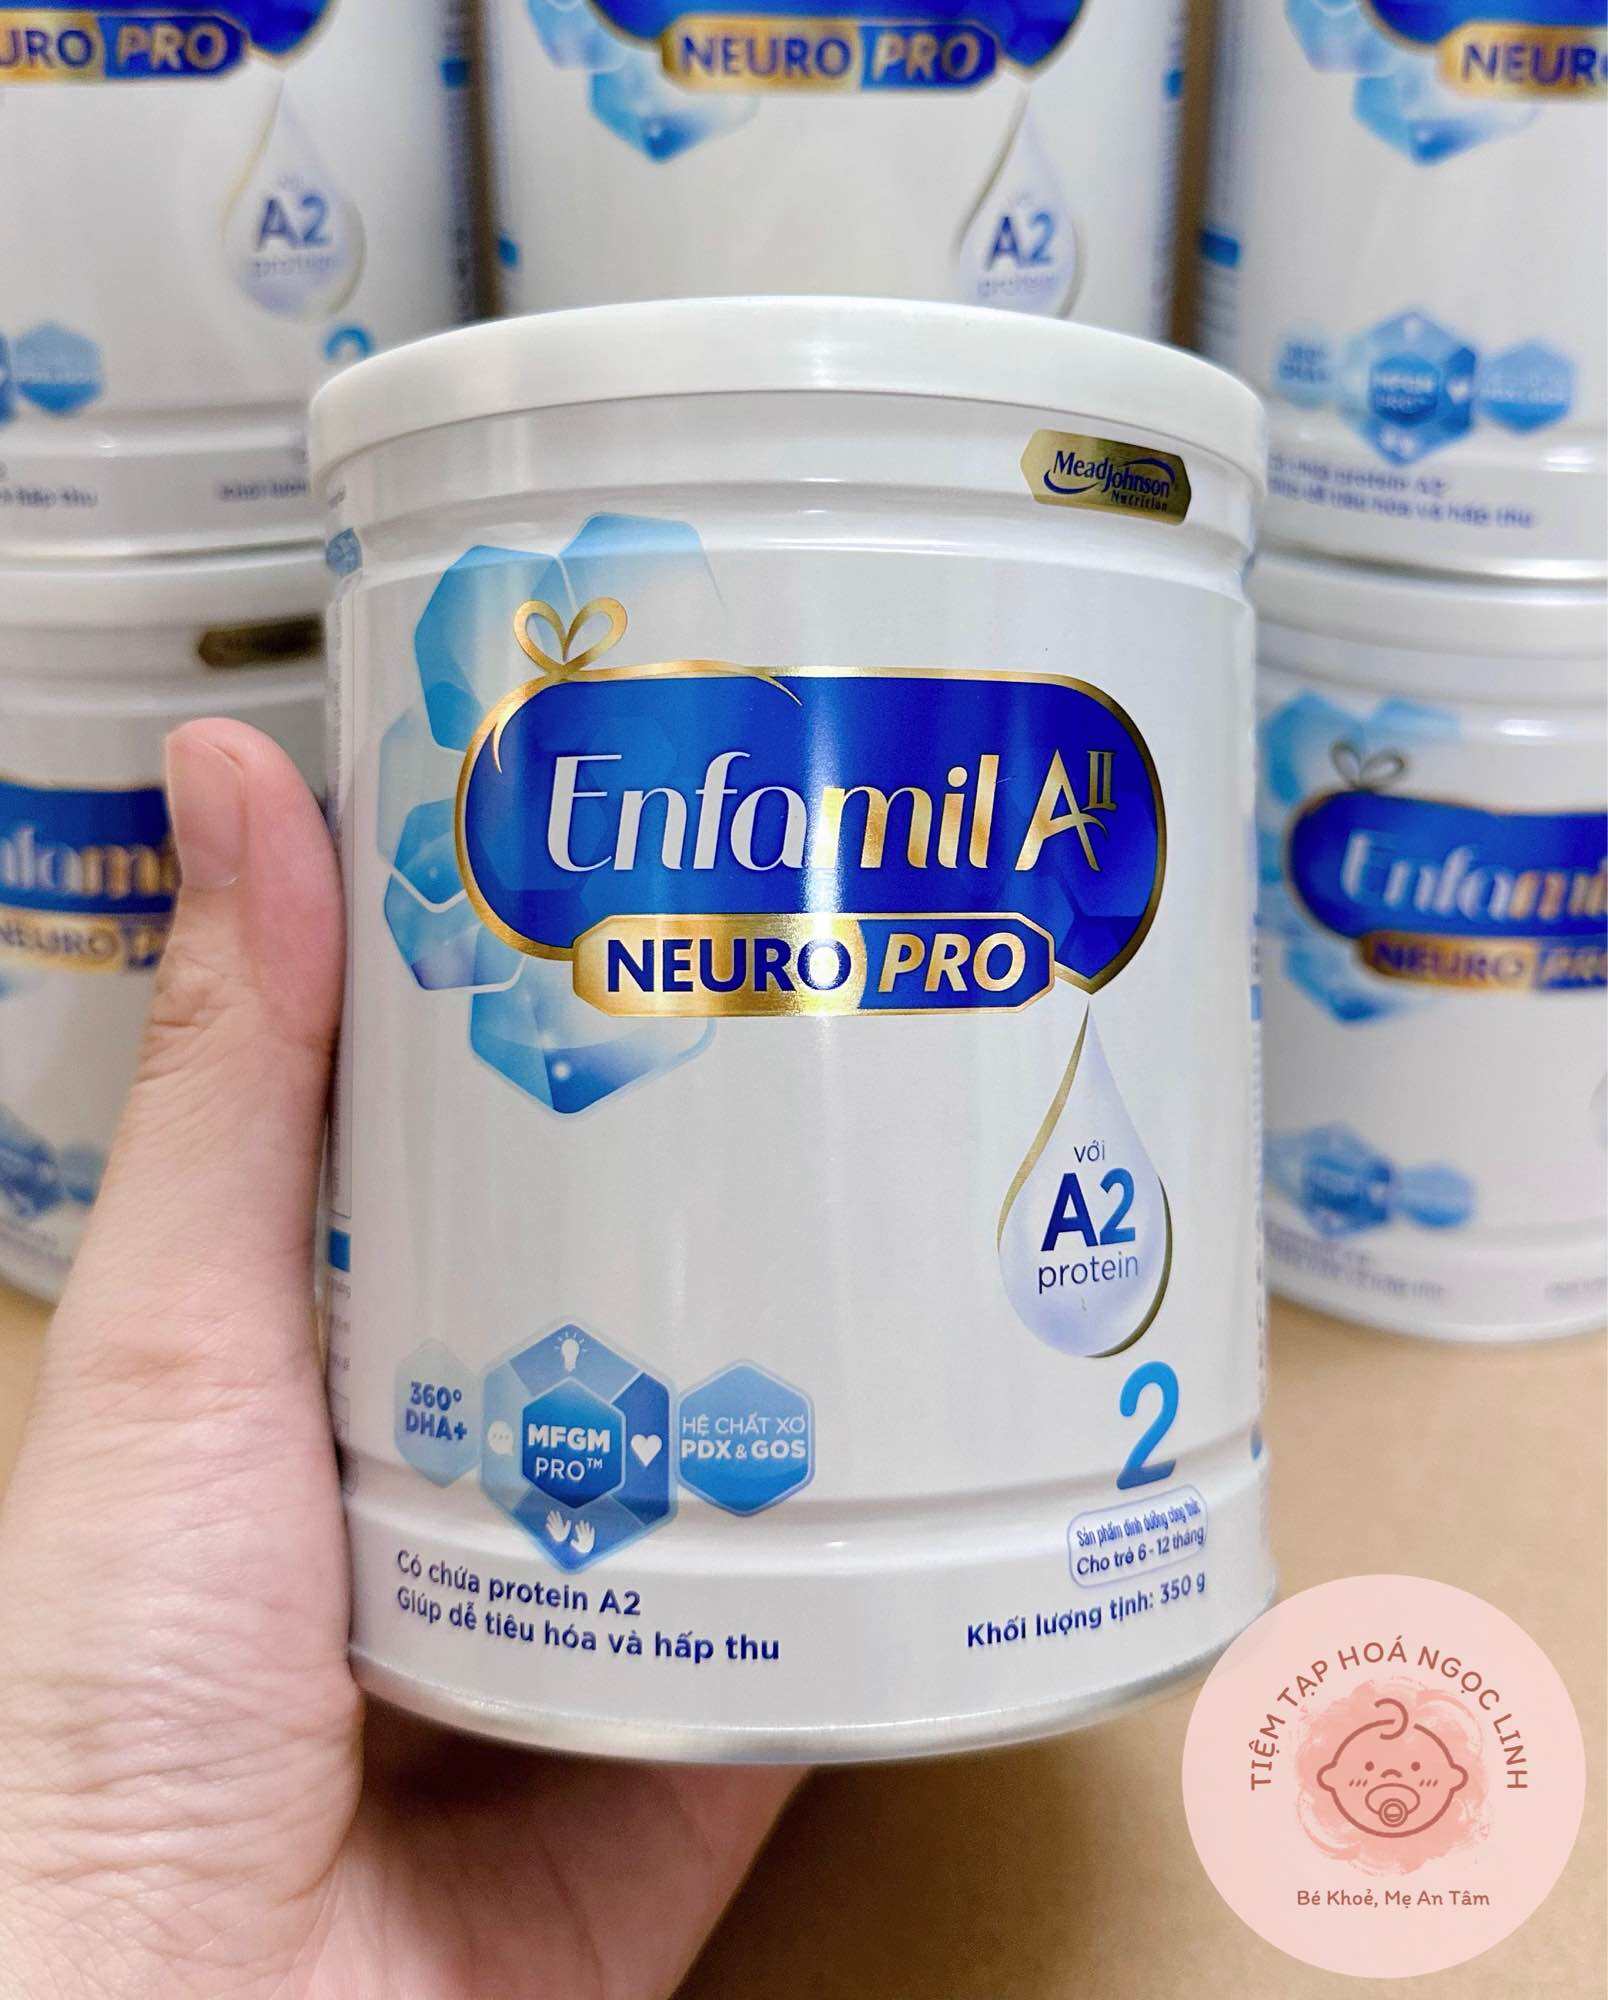 Sữa bột ENFAMIL A2 NEURO PRO 2 6-12 tháng tuổi 350g